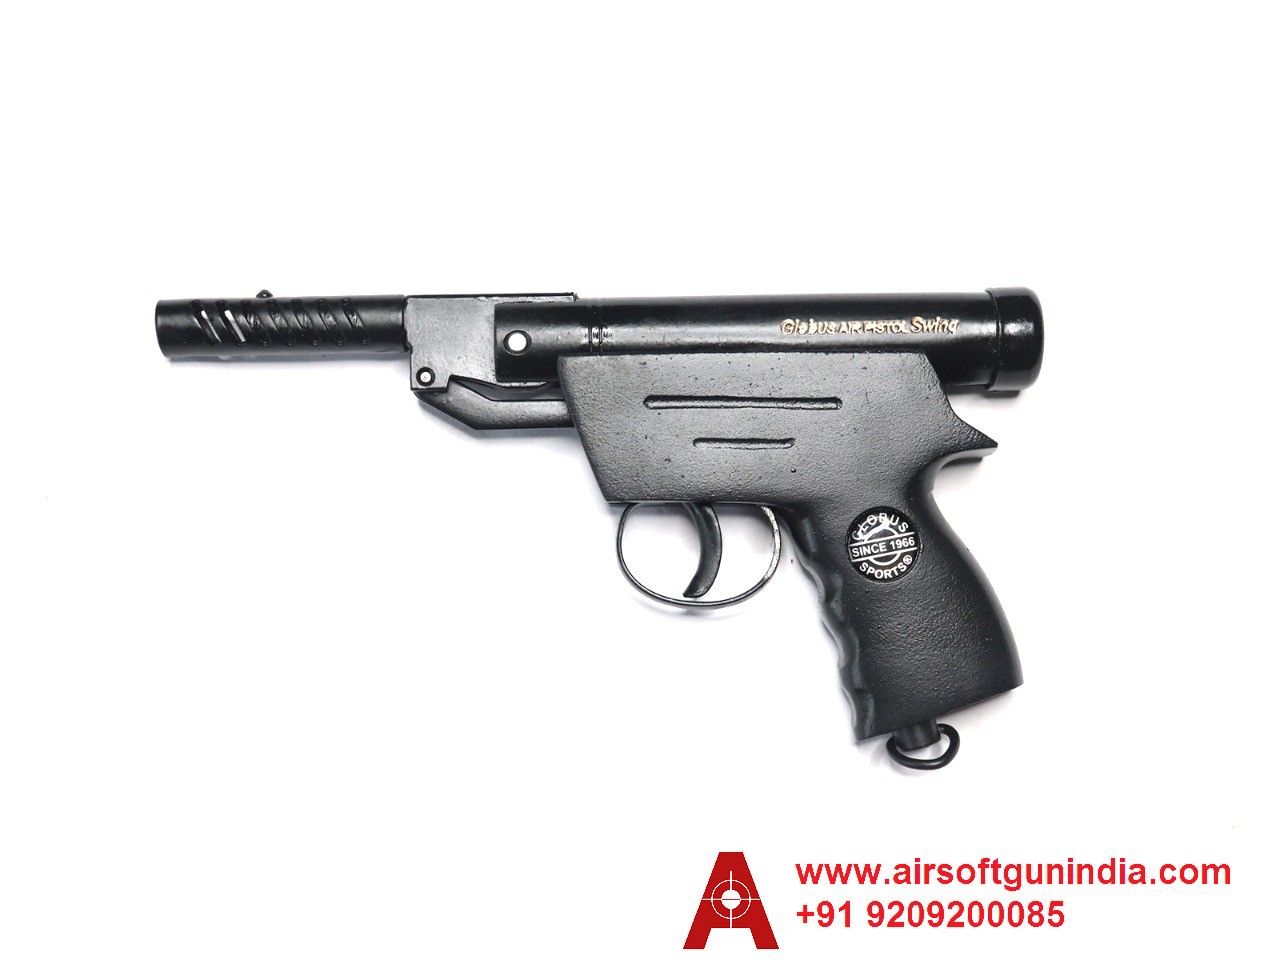 Globus Swing Black Sports .177 Air Pistol By Airsoft Gun India